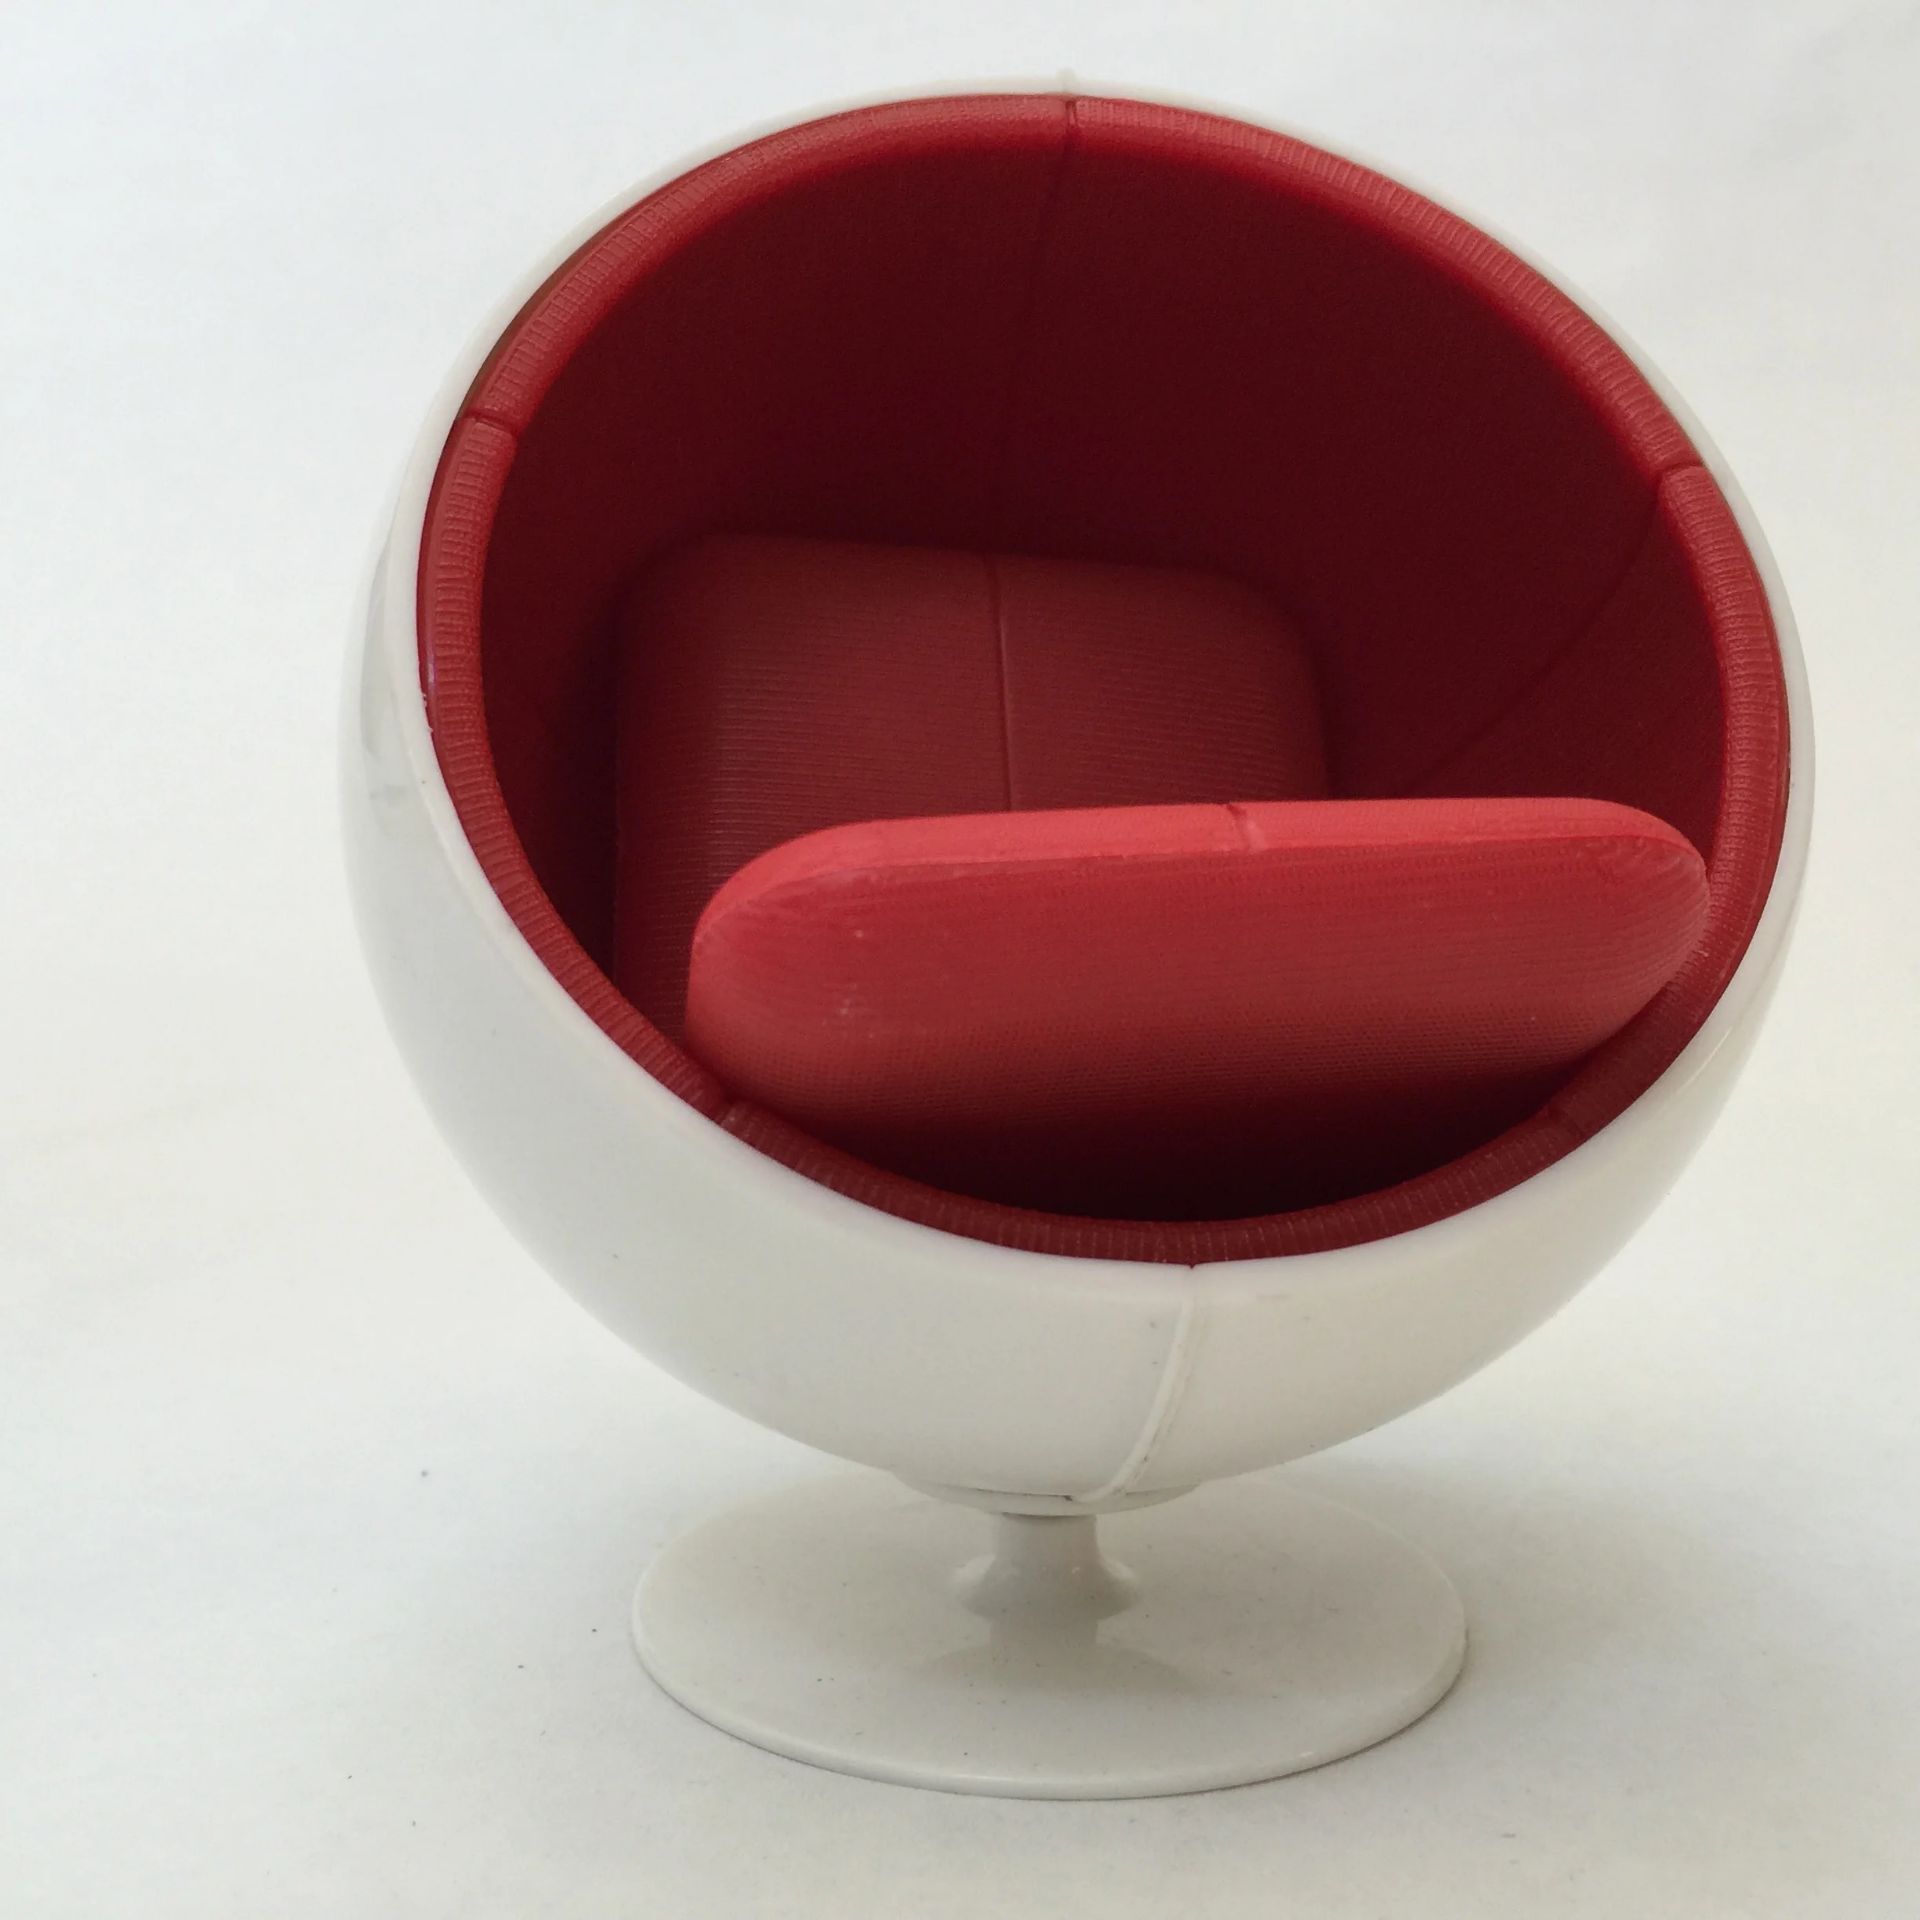 Eero Aarnio Ball Chair Desk Display - Image 3 of 4